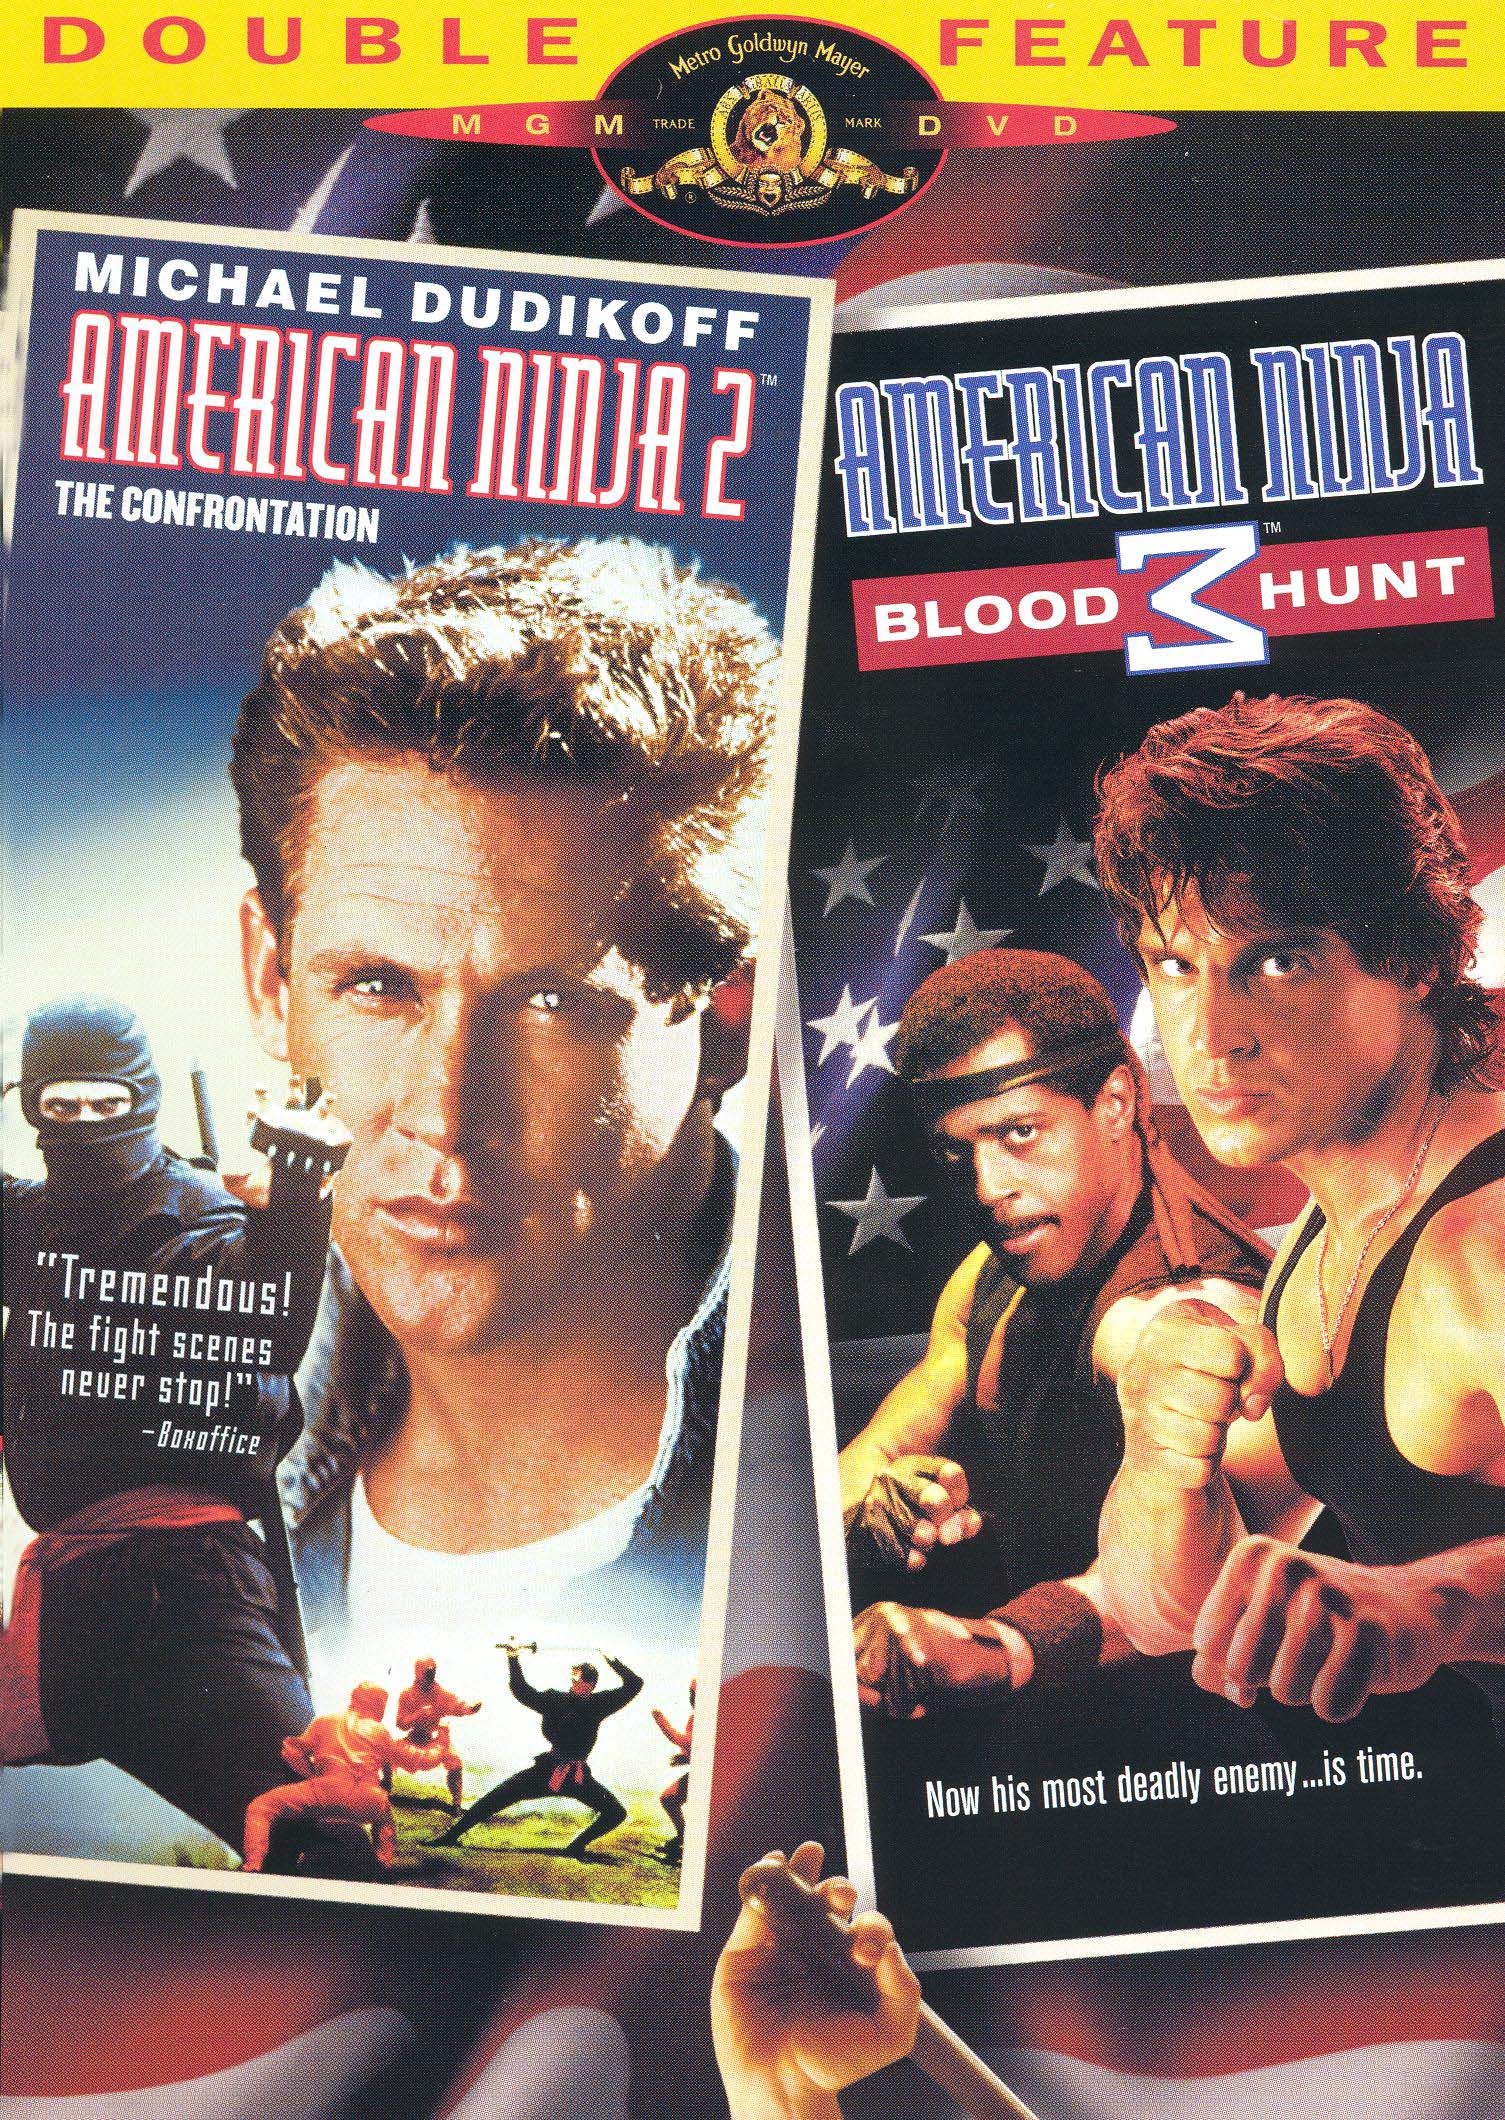 American Ninja 3  Movie posters, Action adventure movies, Martial arts  movies